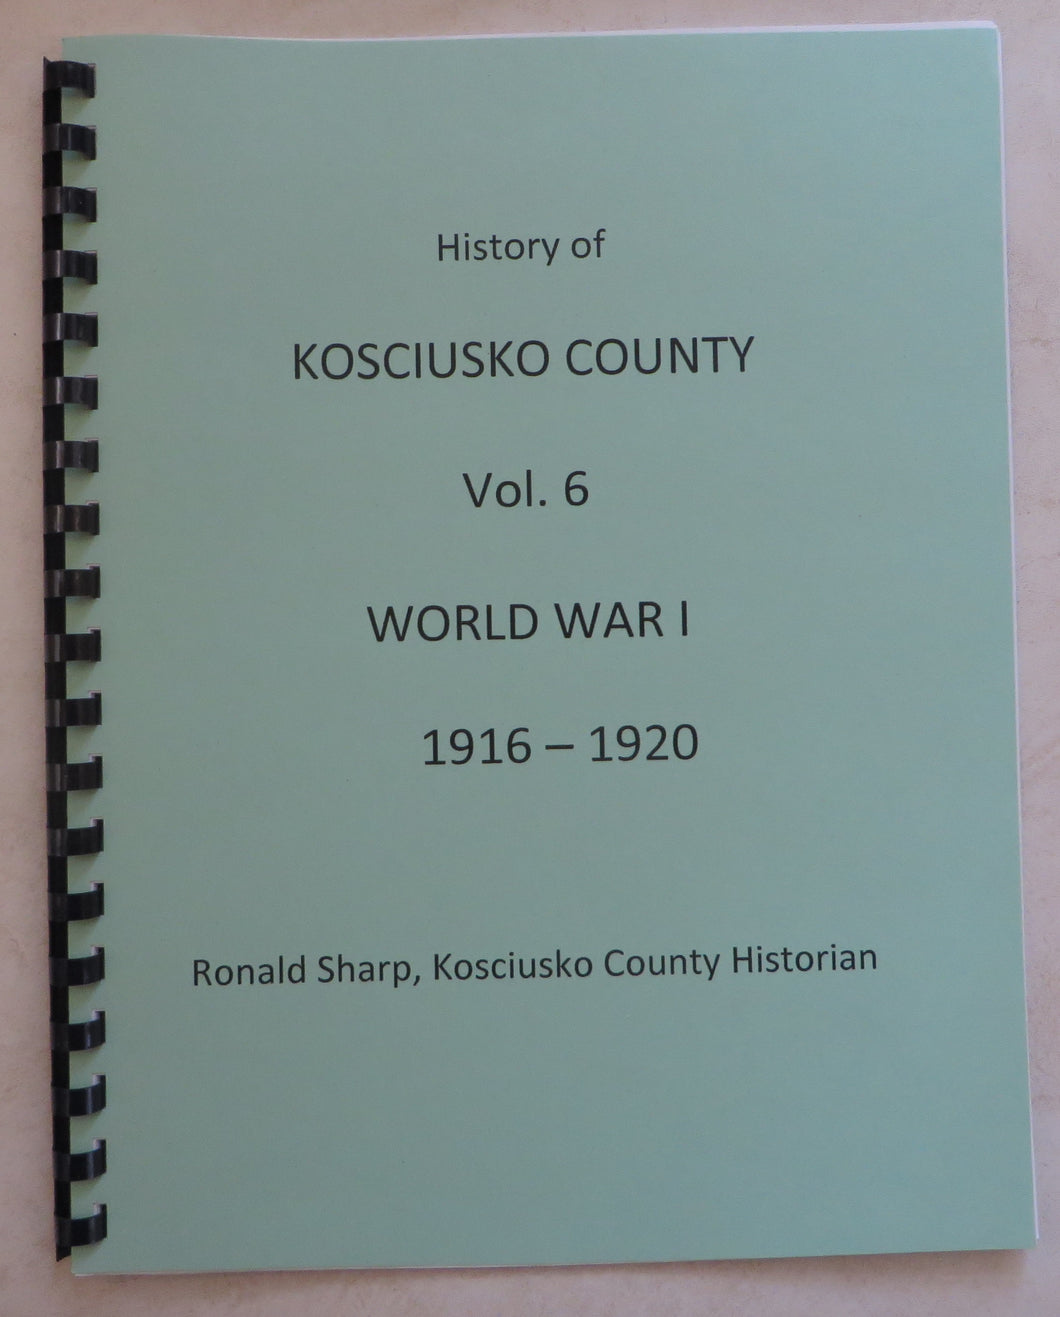 History of Kosciusko County, Volume 6, World War 1, 1916-1920